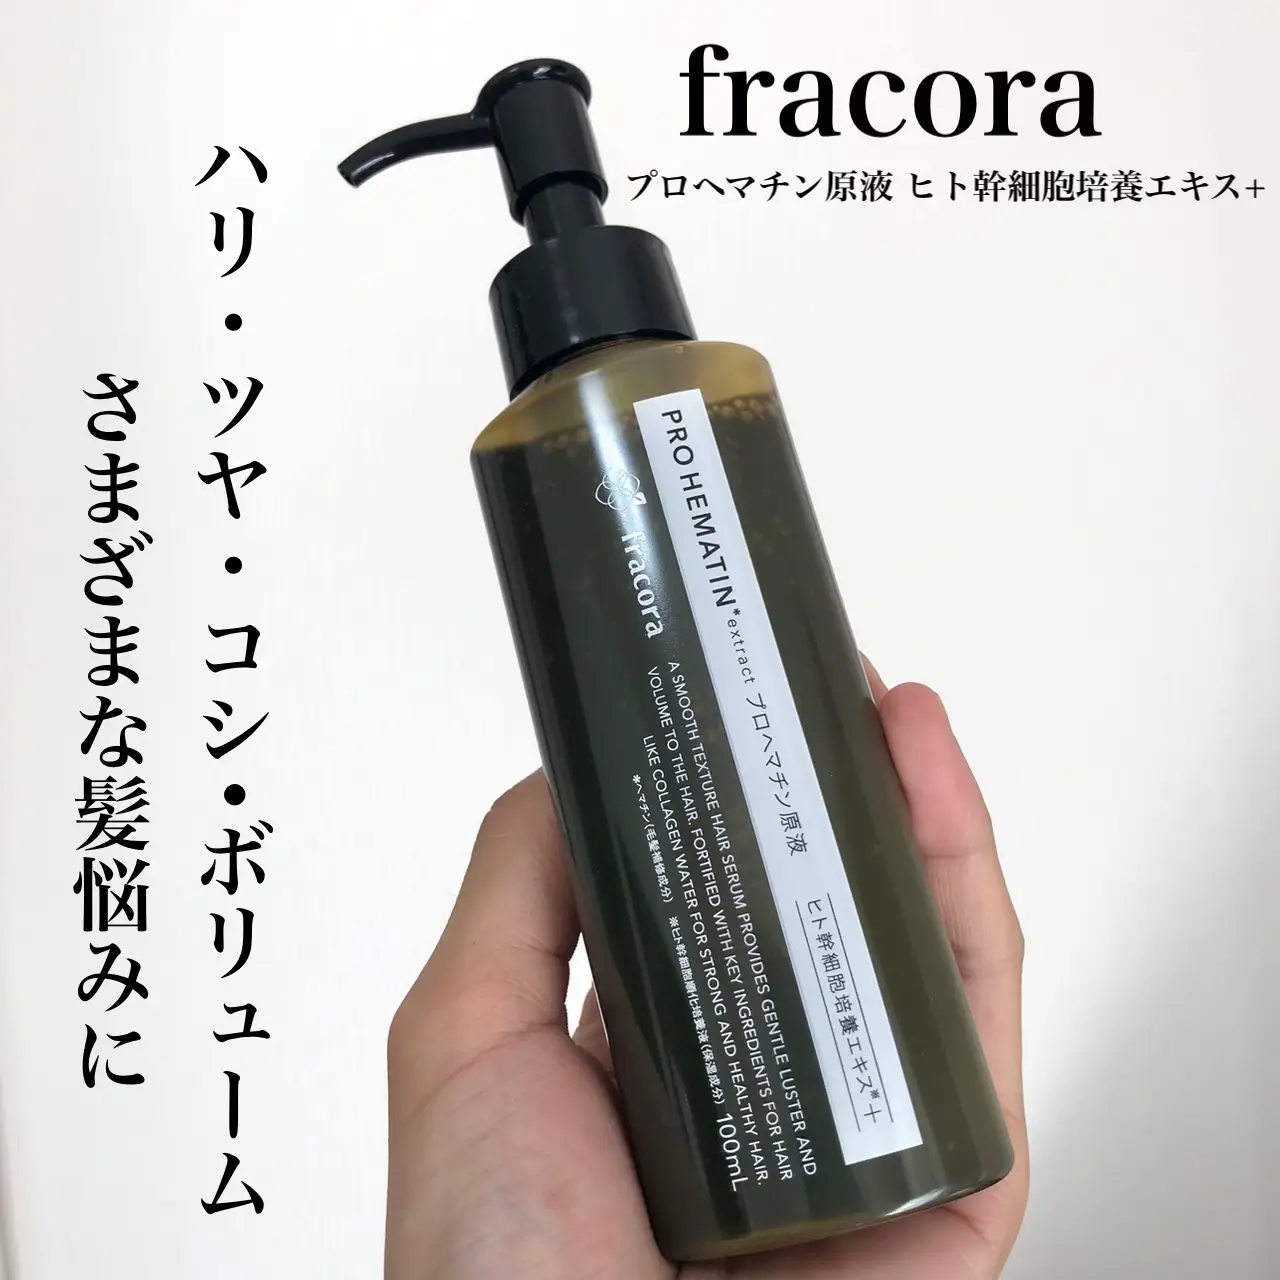 fracora 【プロヘマチン原液 ヒト幹細胞培養エキス+】 | ちずる🌸が ...